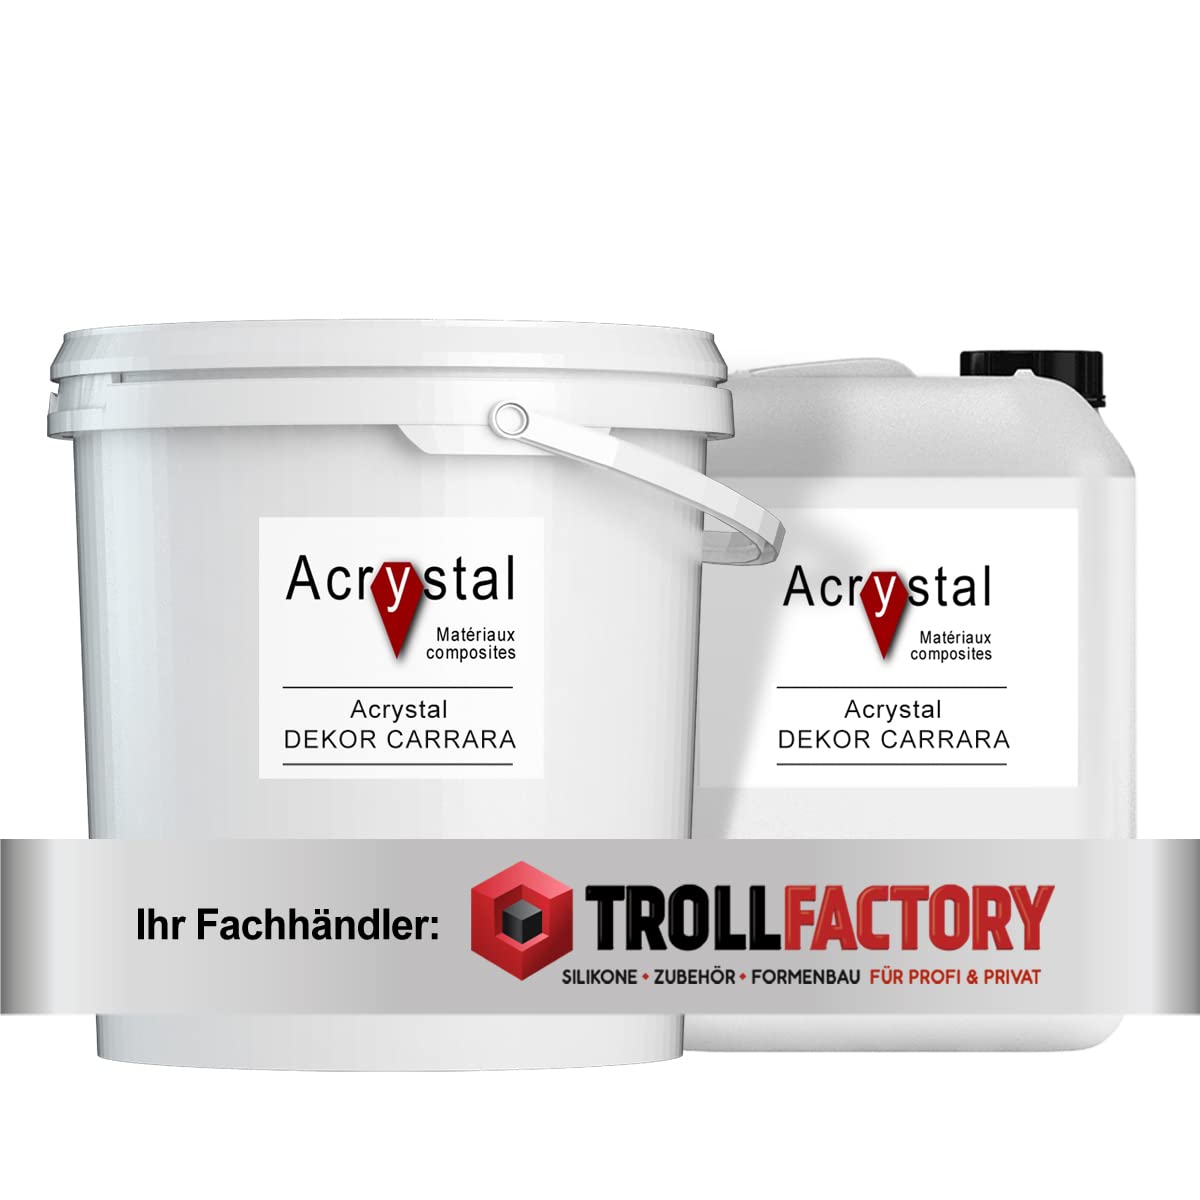 TFC Troll Factory ACRYSTAL Dekor Carrara Acrylharz auf Wasserbasis Set PRIMA + Carrara, (2,4 kg (2 kg + 0,4 kg))